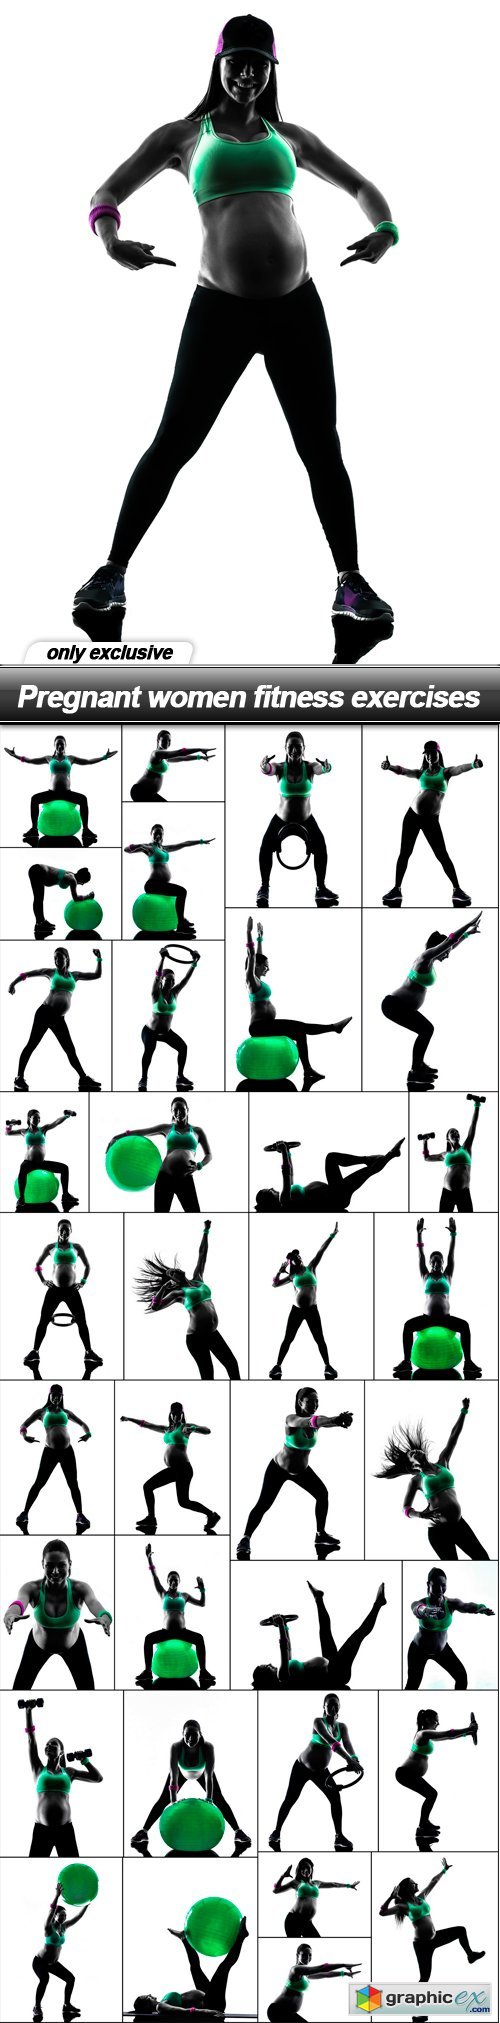 Pregnant women fitness exercises - 35 UHQ JPEG